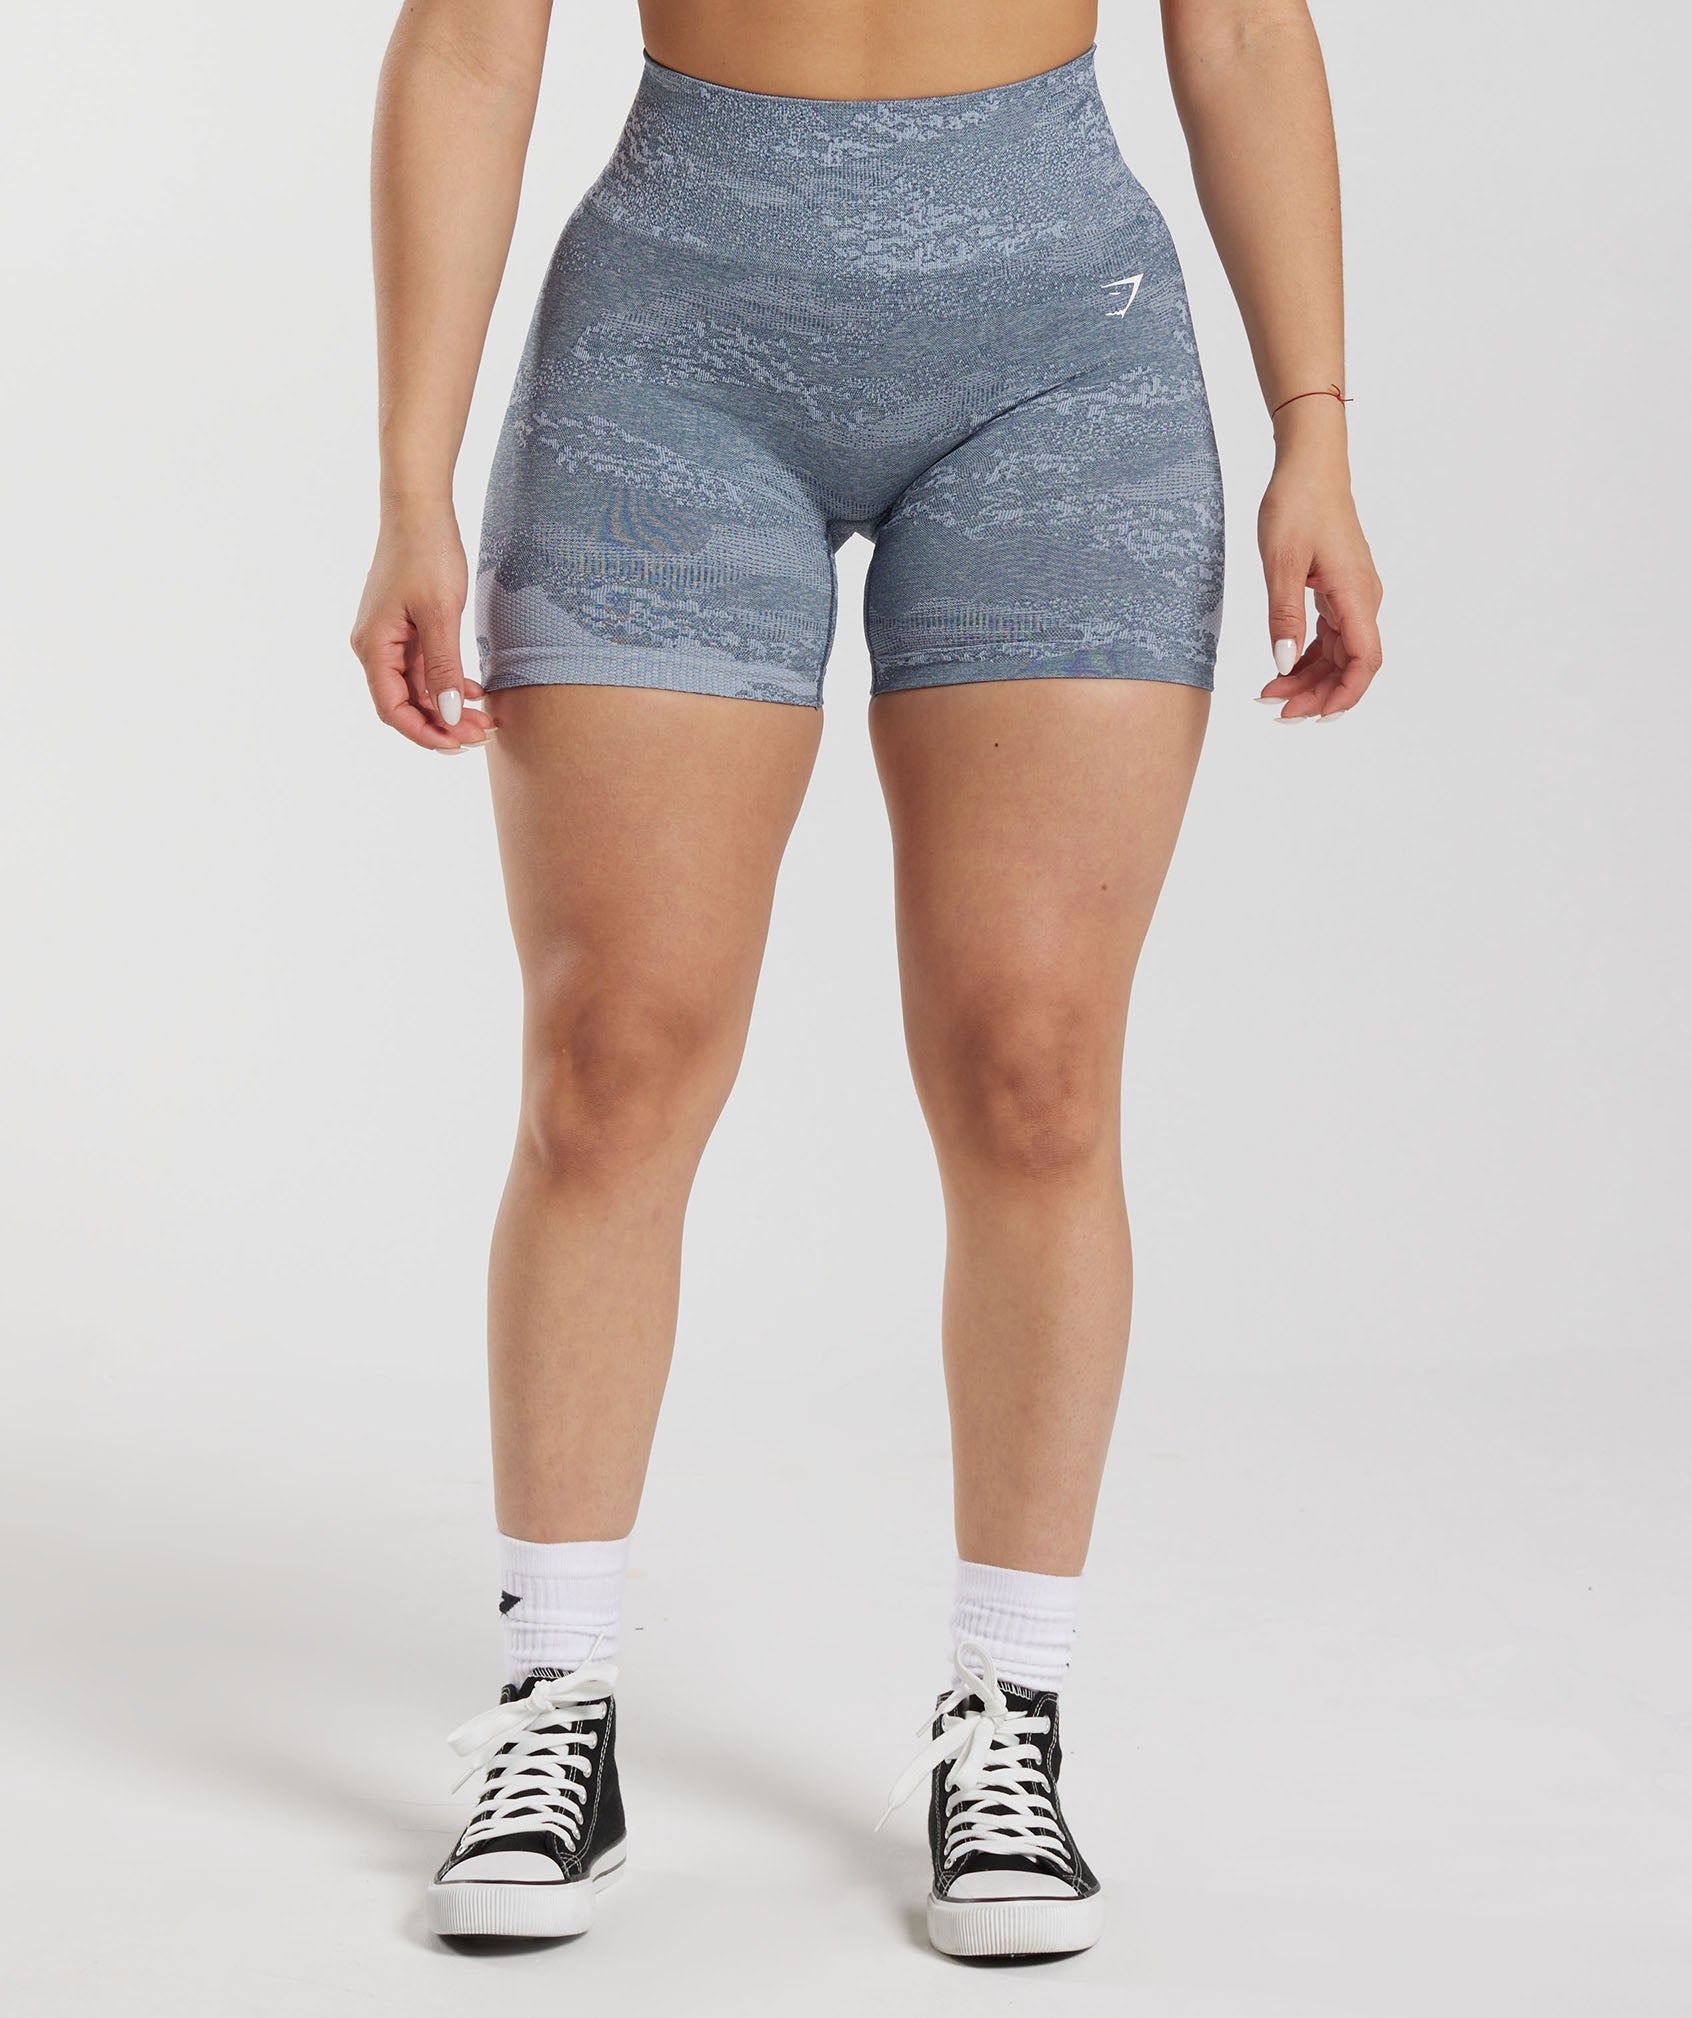 Grey Women's Shorts